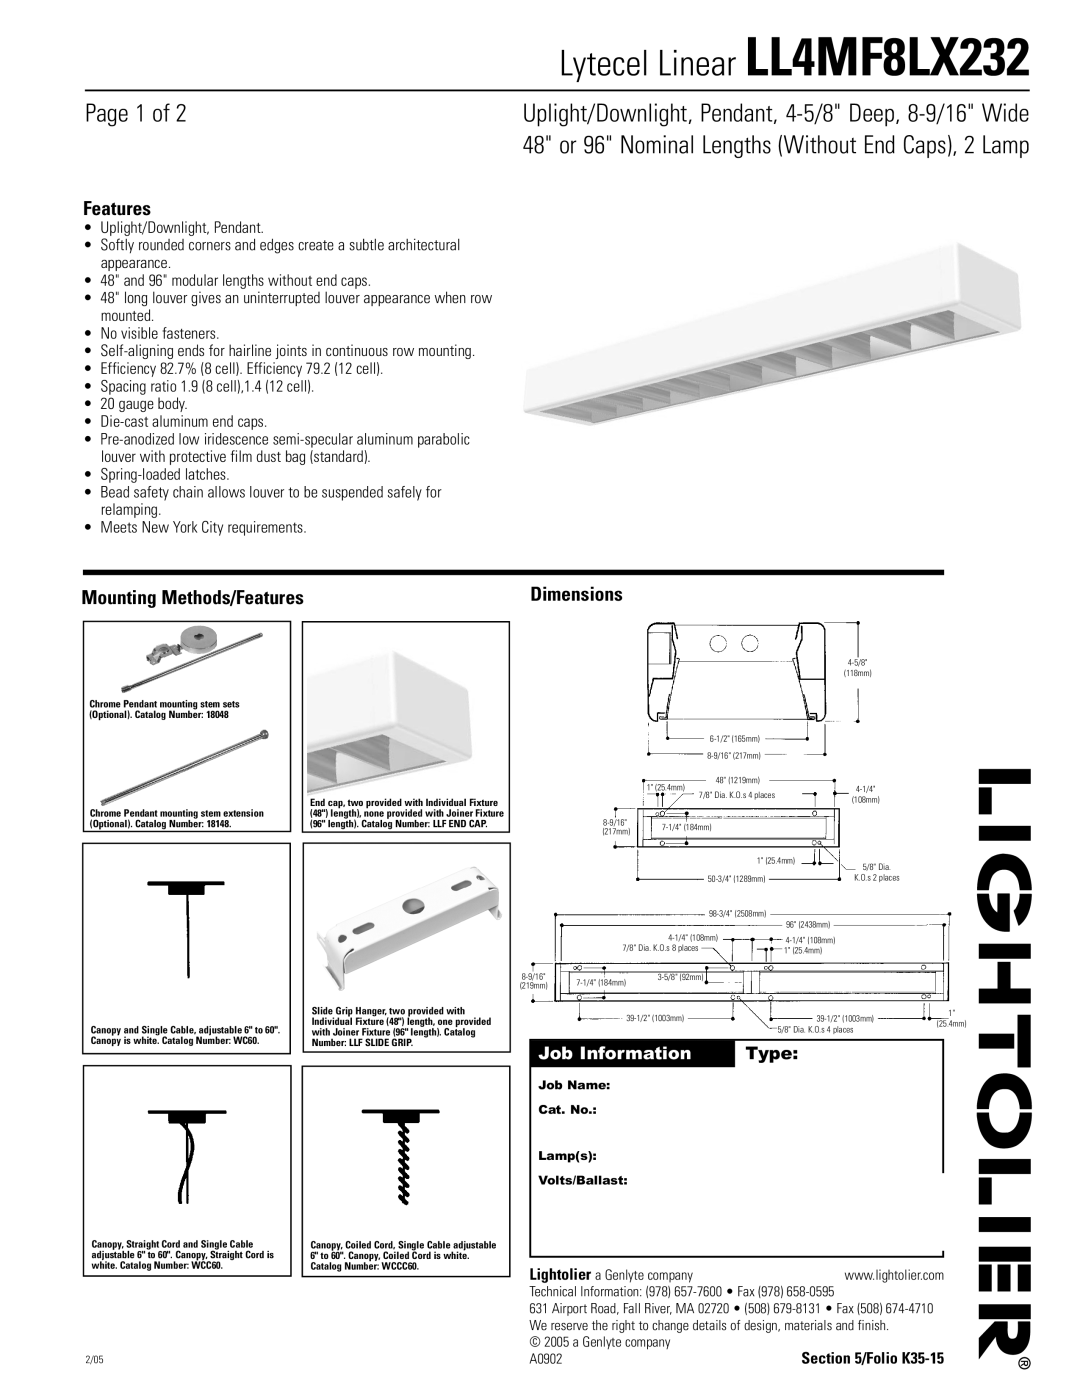 Lightolier dimensions Lytecel Linear LL4MF8LX232, Page 1 of, Uplight/Downlight, Pendant, 4-5/8Deep, 8-9/16Wide, Type 